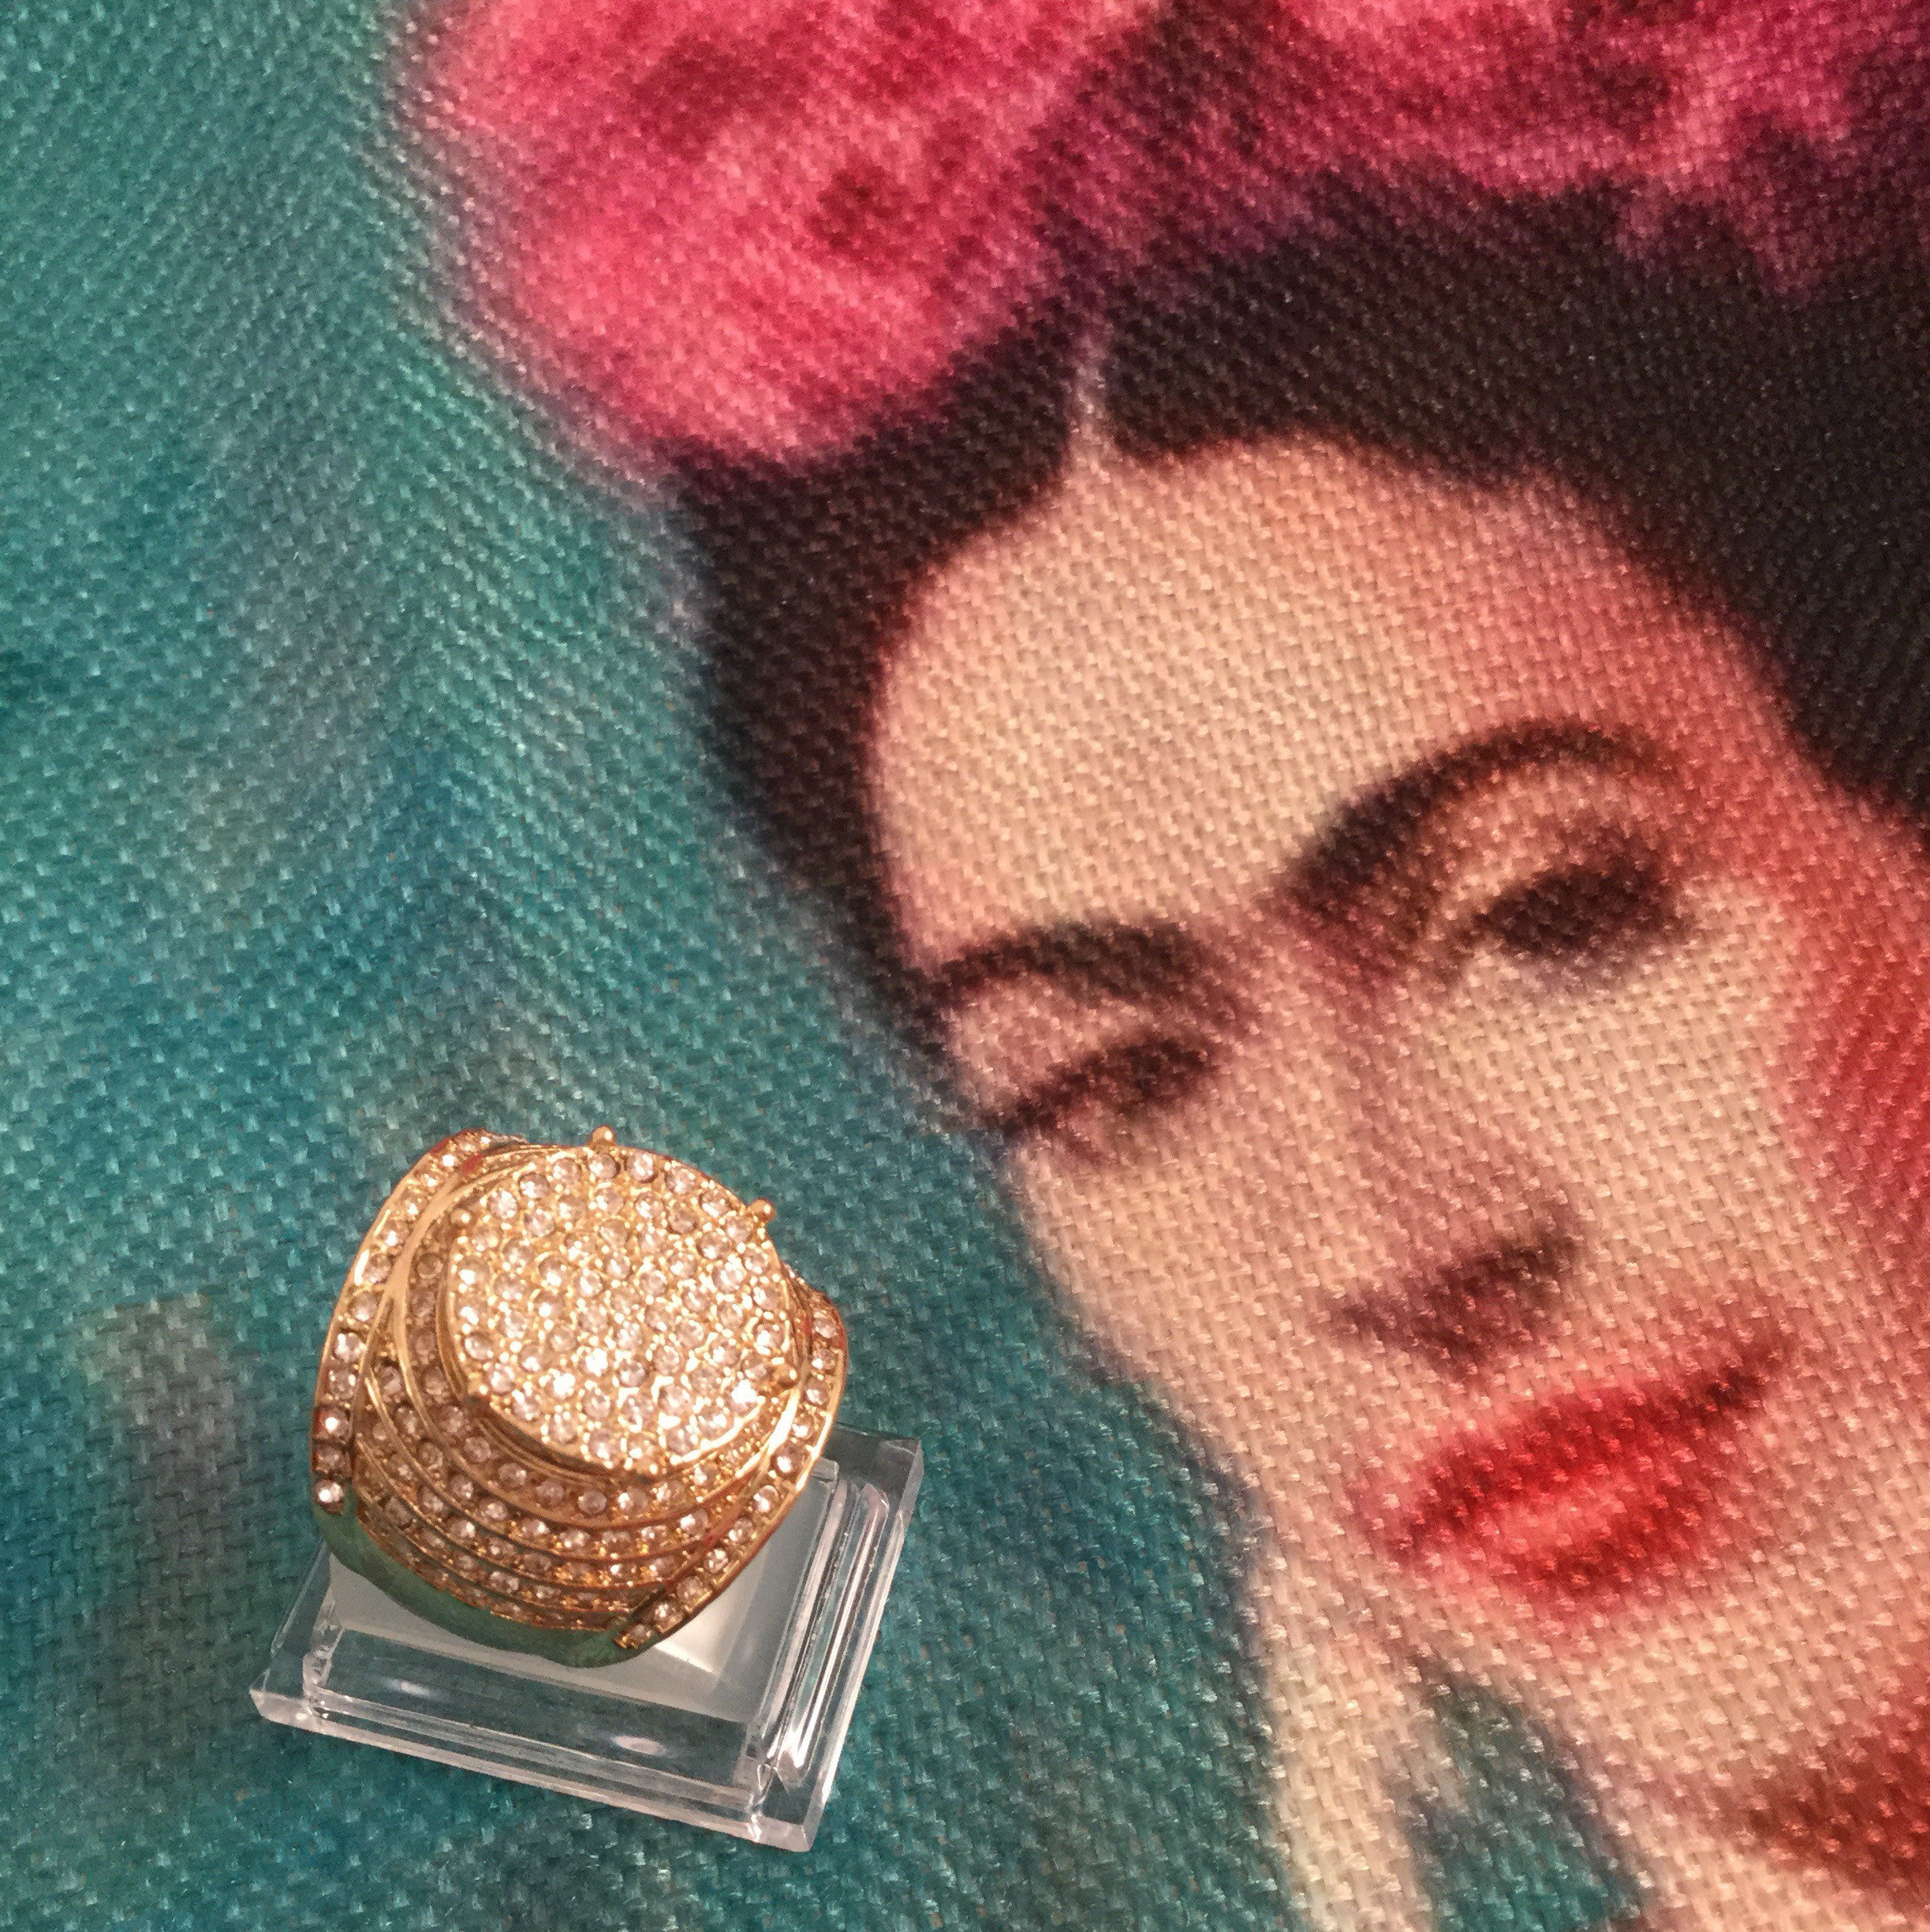 Selena's Gifted Ring from Yolanda Saldivar